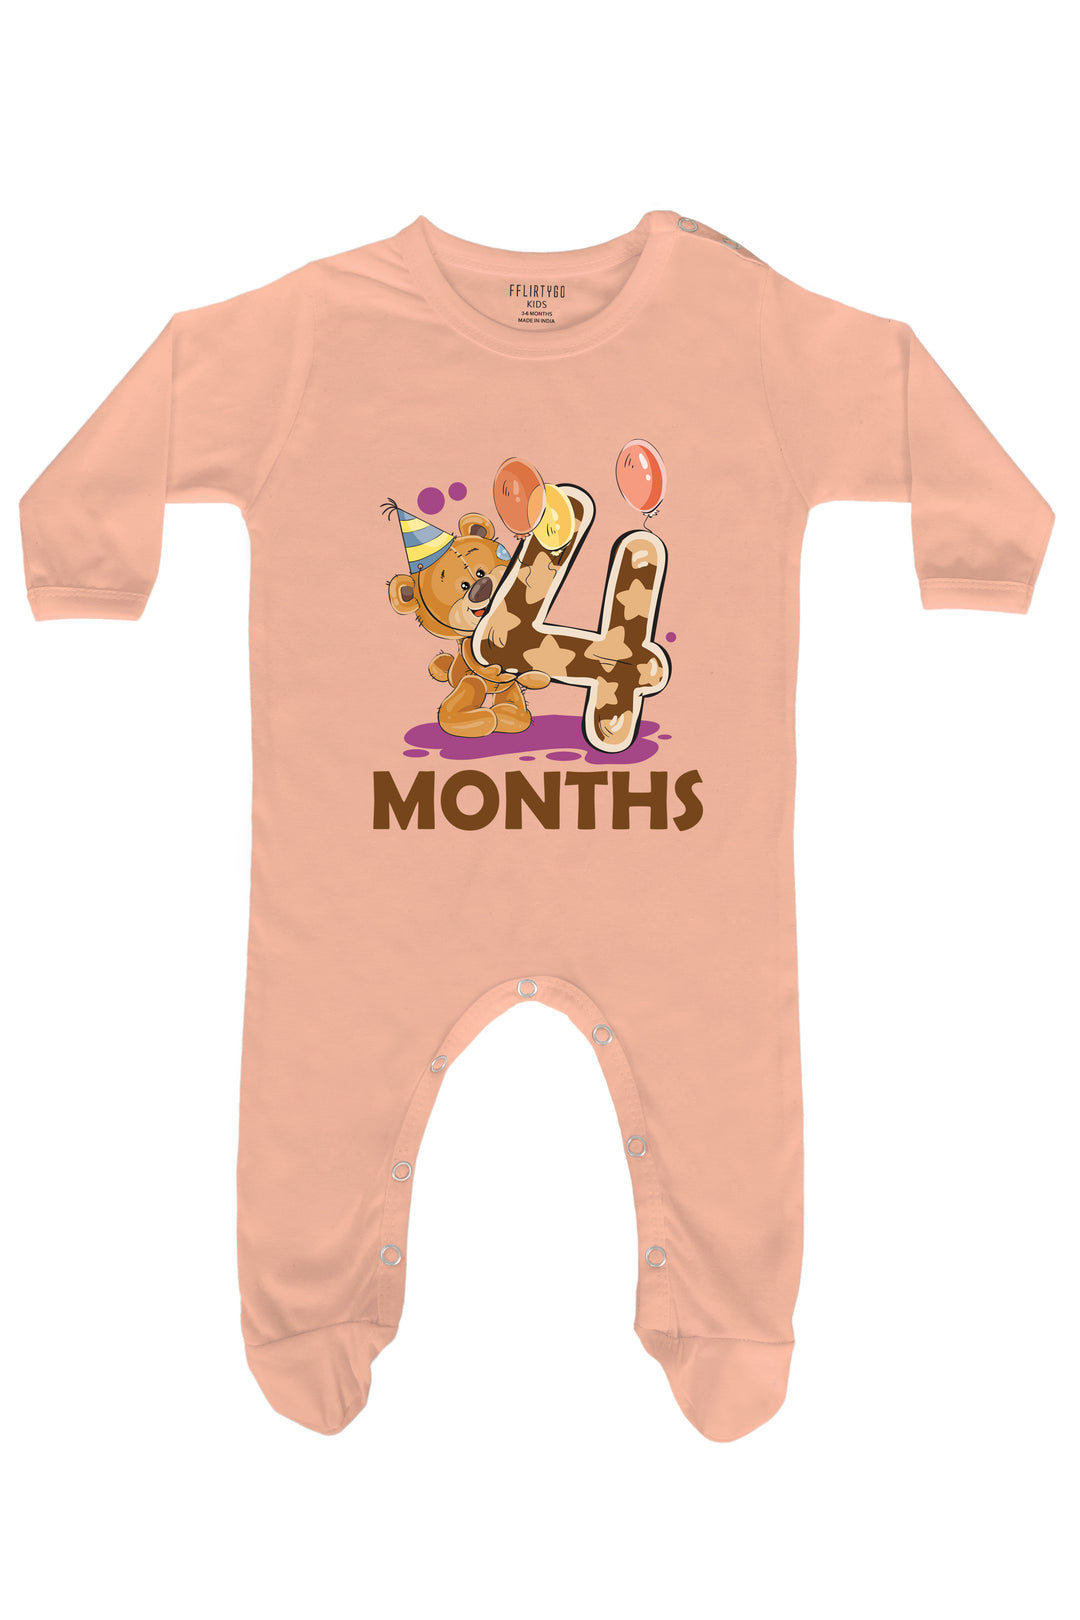 Four Months Milestone Baby Romper | Onesies